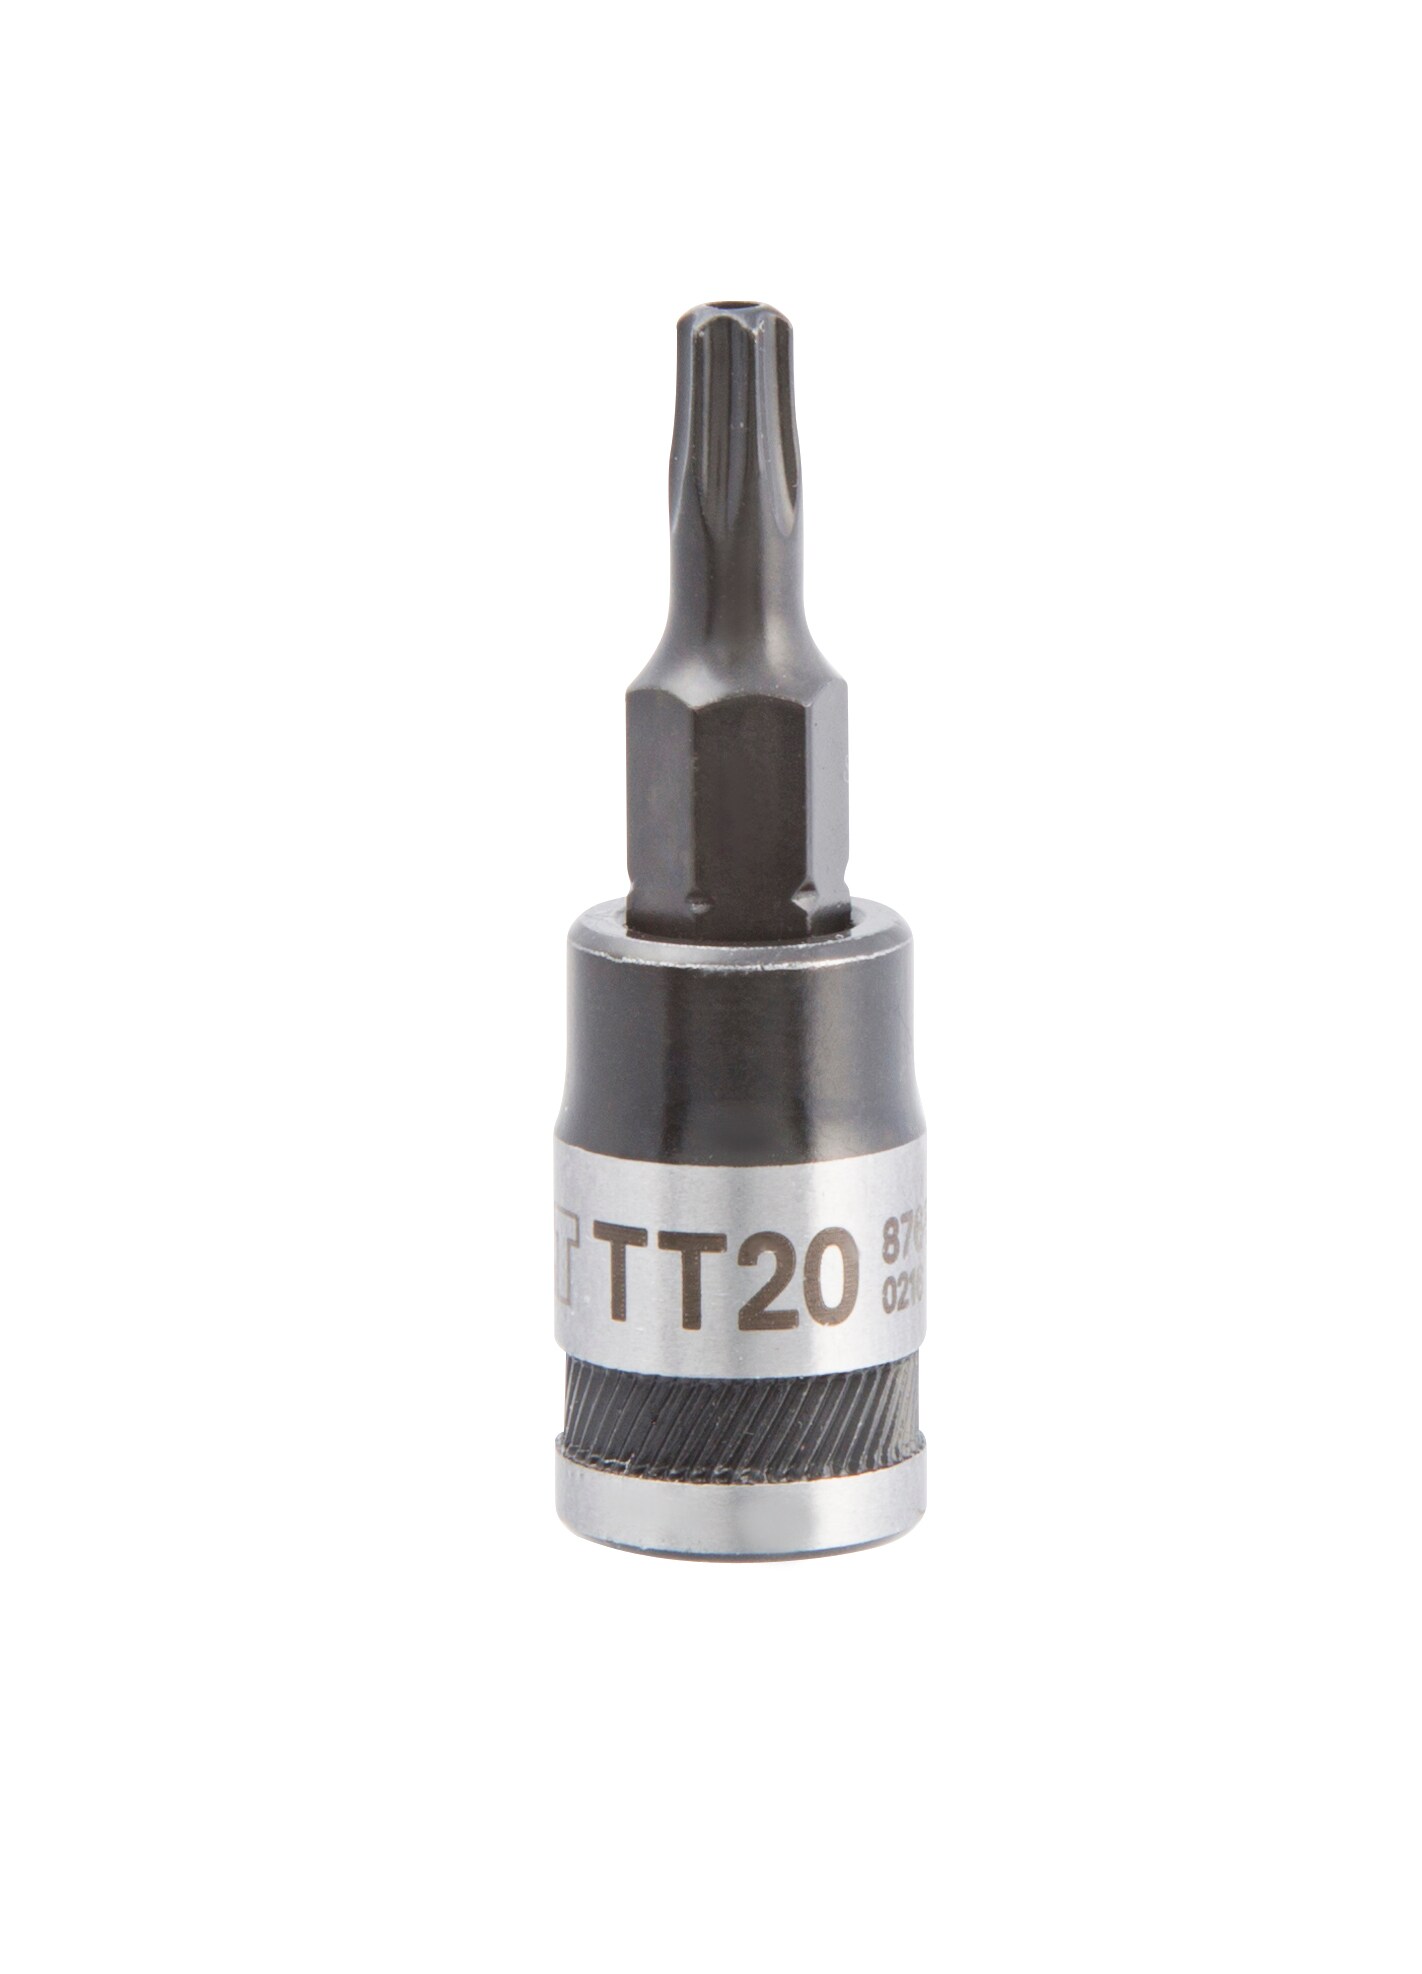 Details about   T55 Torx Tamper Resistant Security Insert Bit 1-1/4" Long 5/16" Hex Drive 